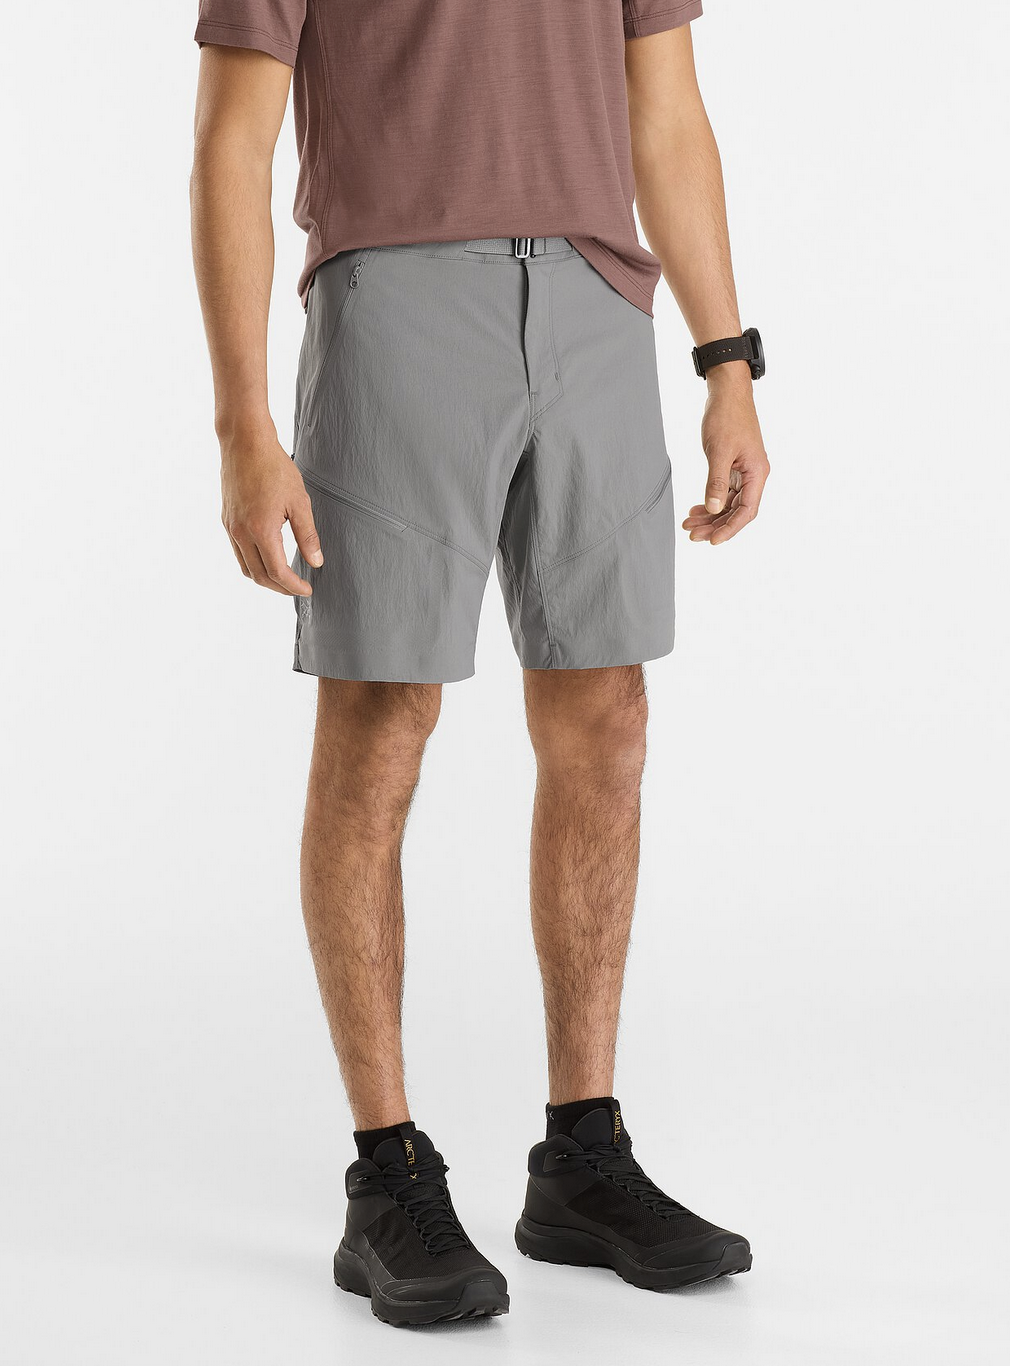 Men's reinforced Hiking shorts